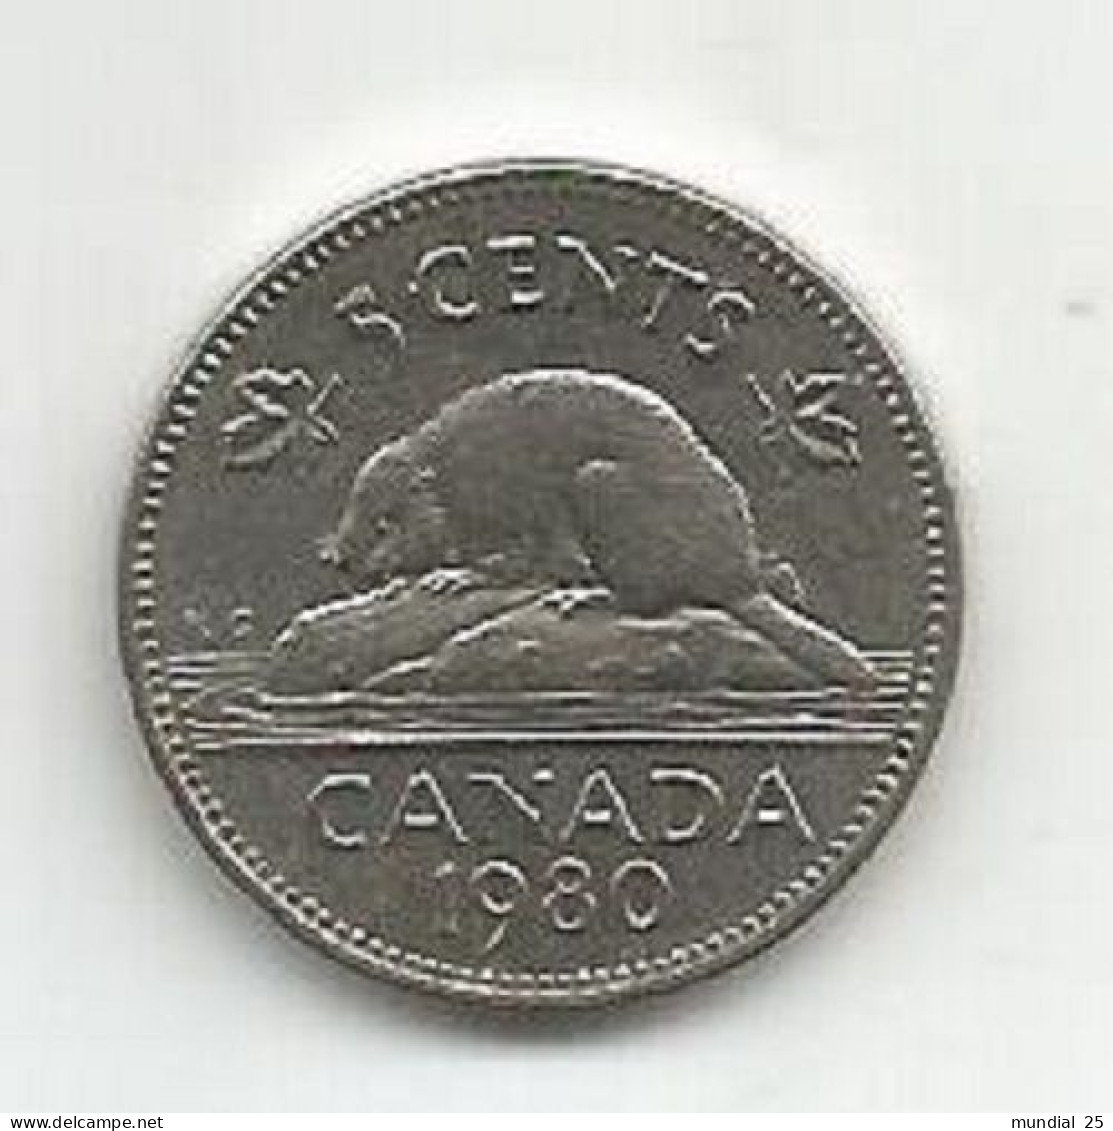 CANADA 5 CENTS 1980 - Canada